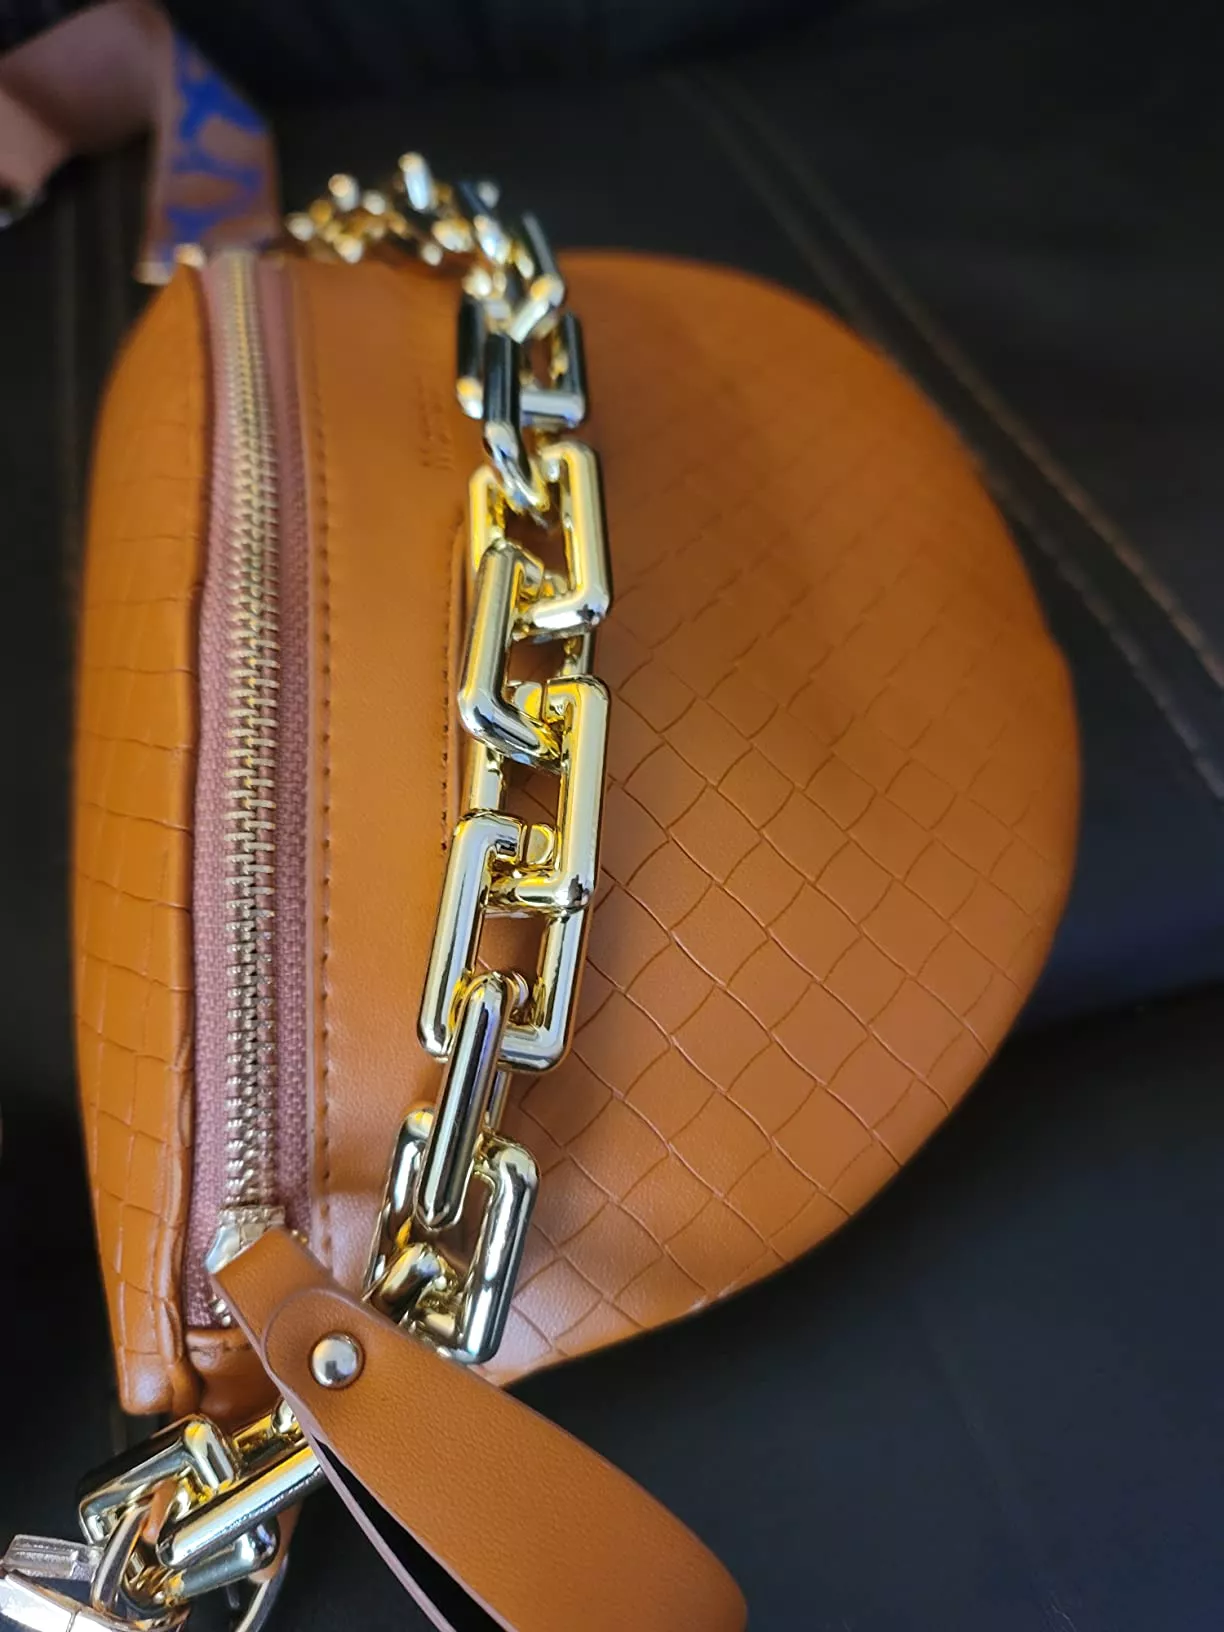 Luxury Women's Fanny Pack Waist Bag Thick Chain Shoulder Crossbody